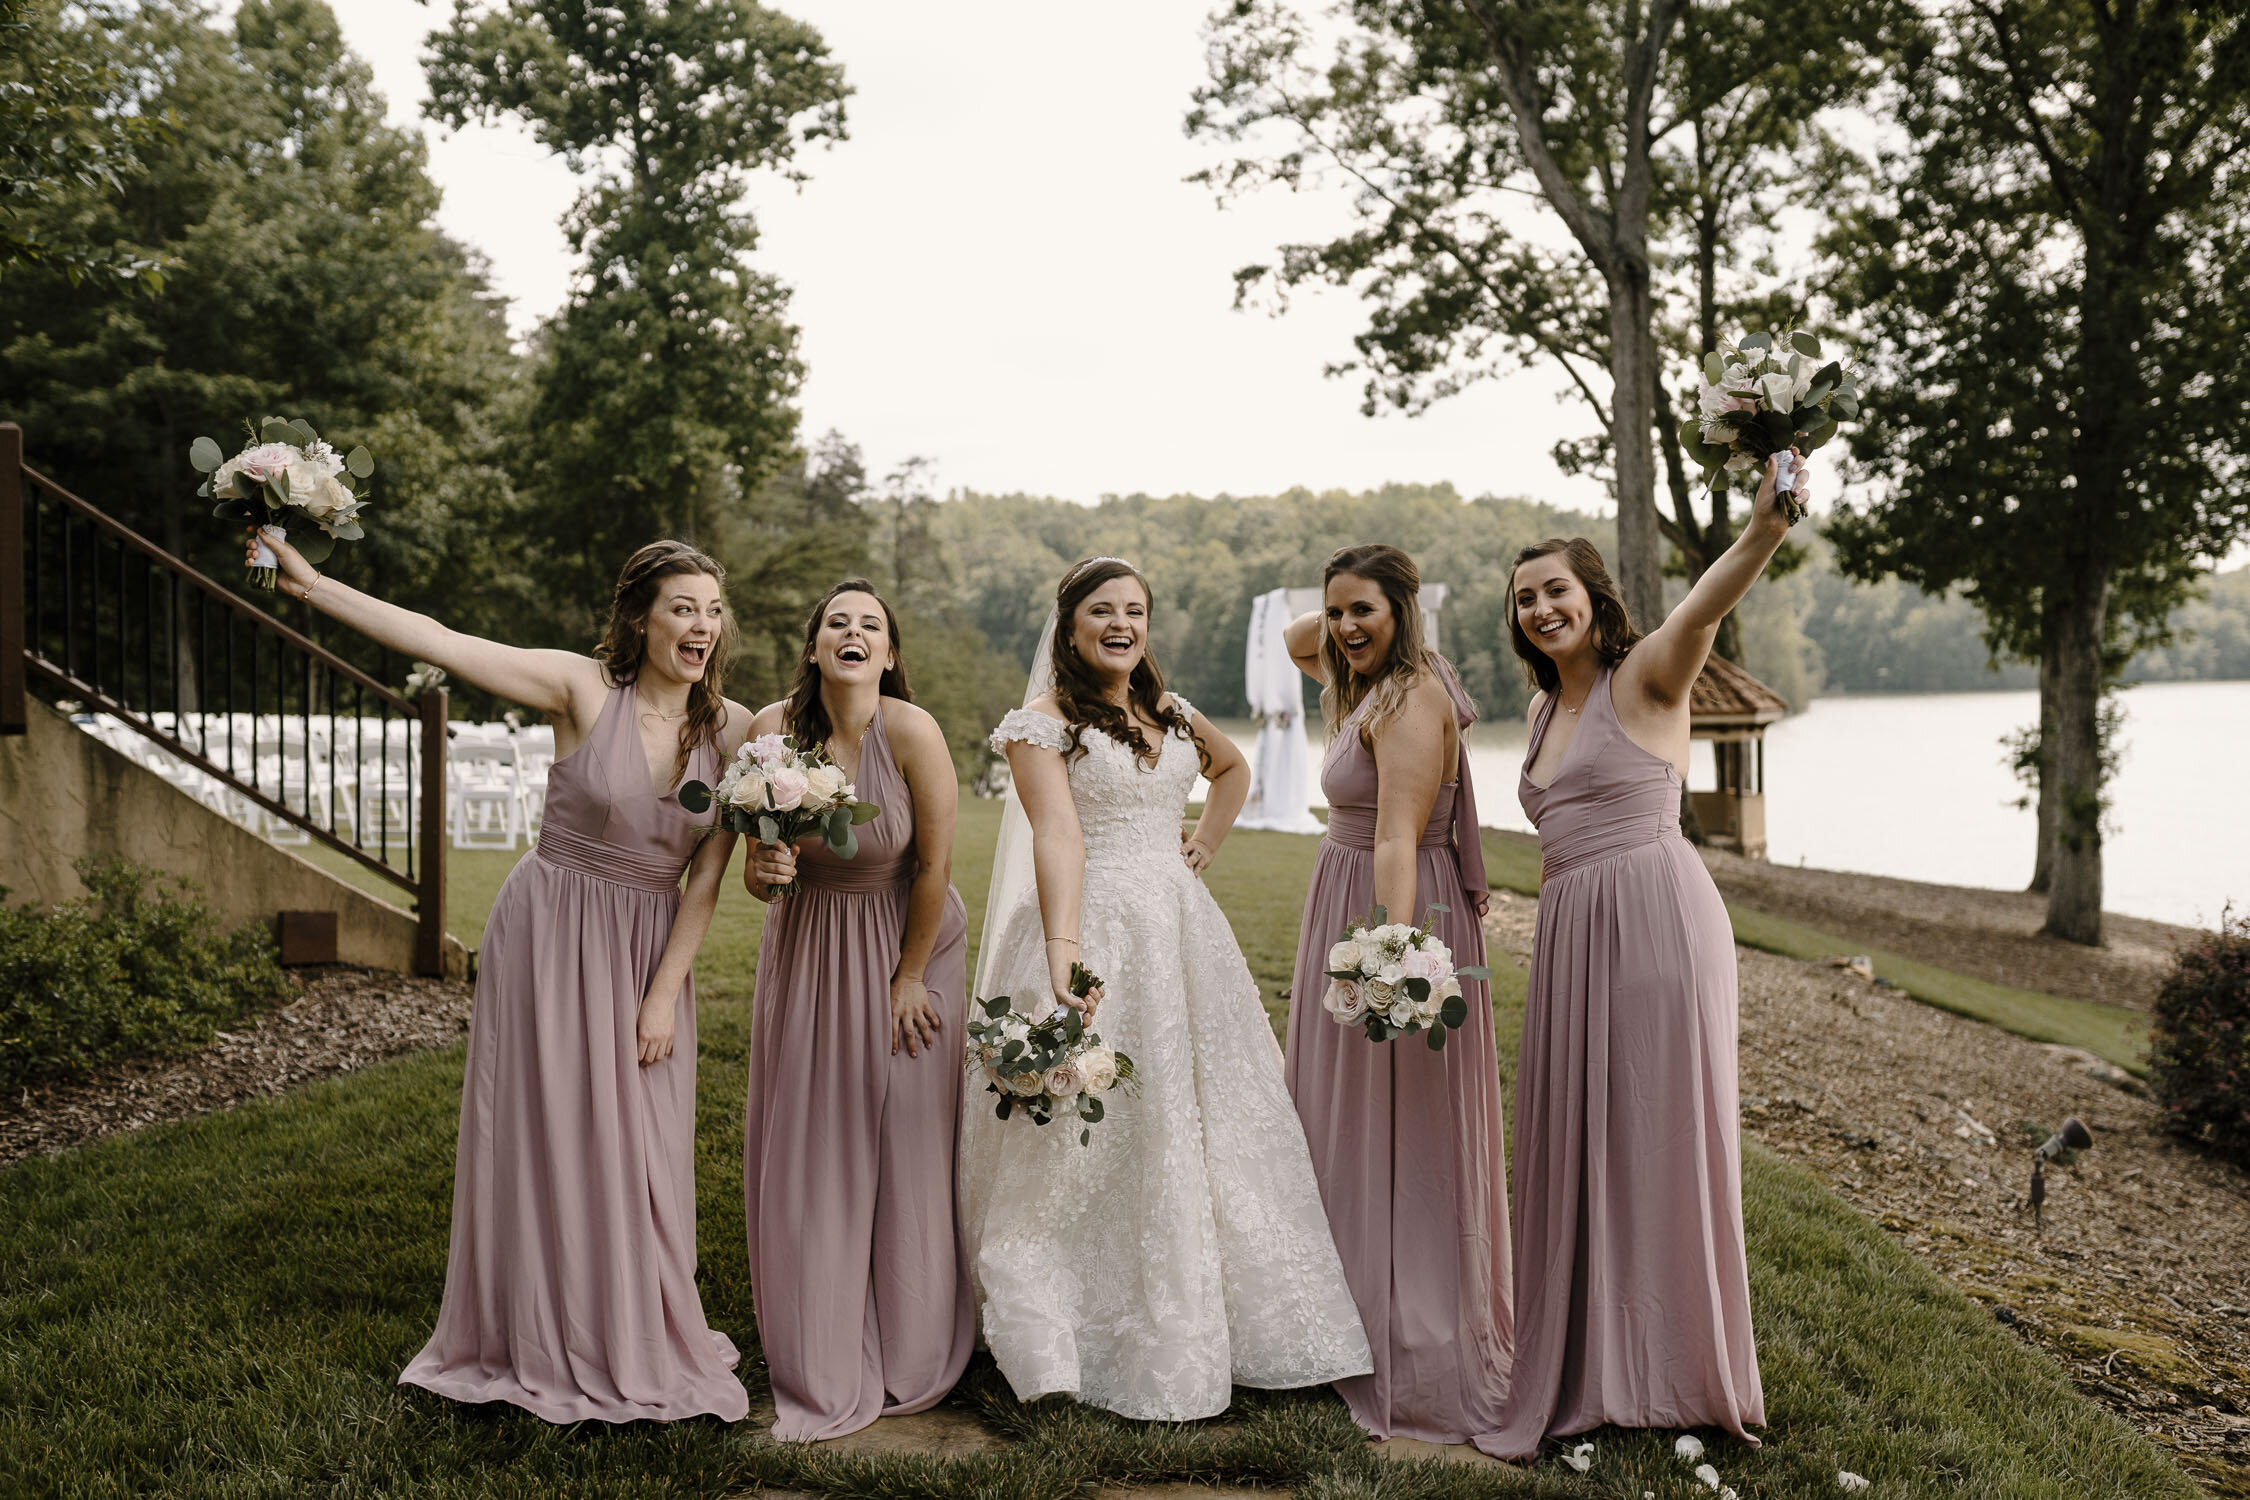 Greensboro Winston-Salem, NC Summer Wedding at Bella Collina by Kayli LaFon Photography | North Carolina based Intimate Wedding & Elopement Photographer